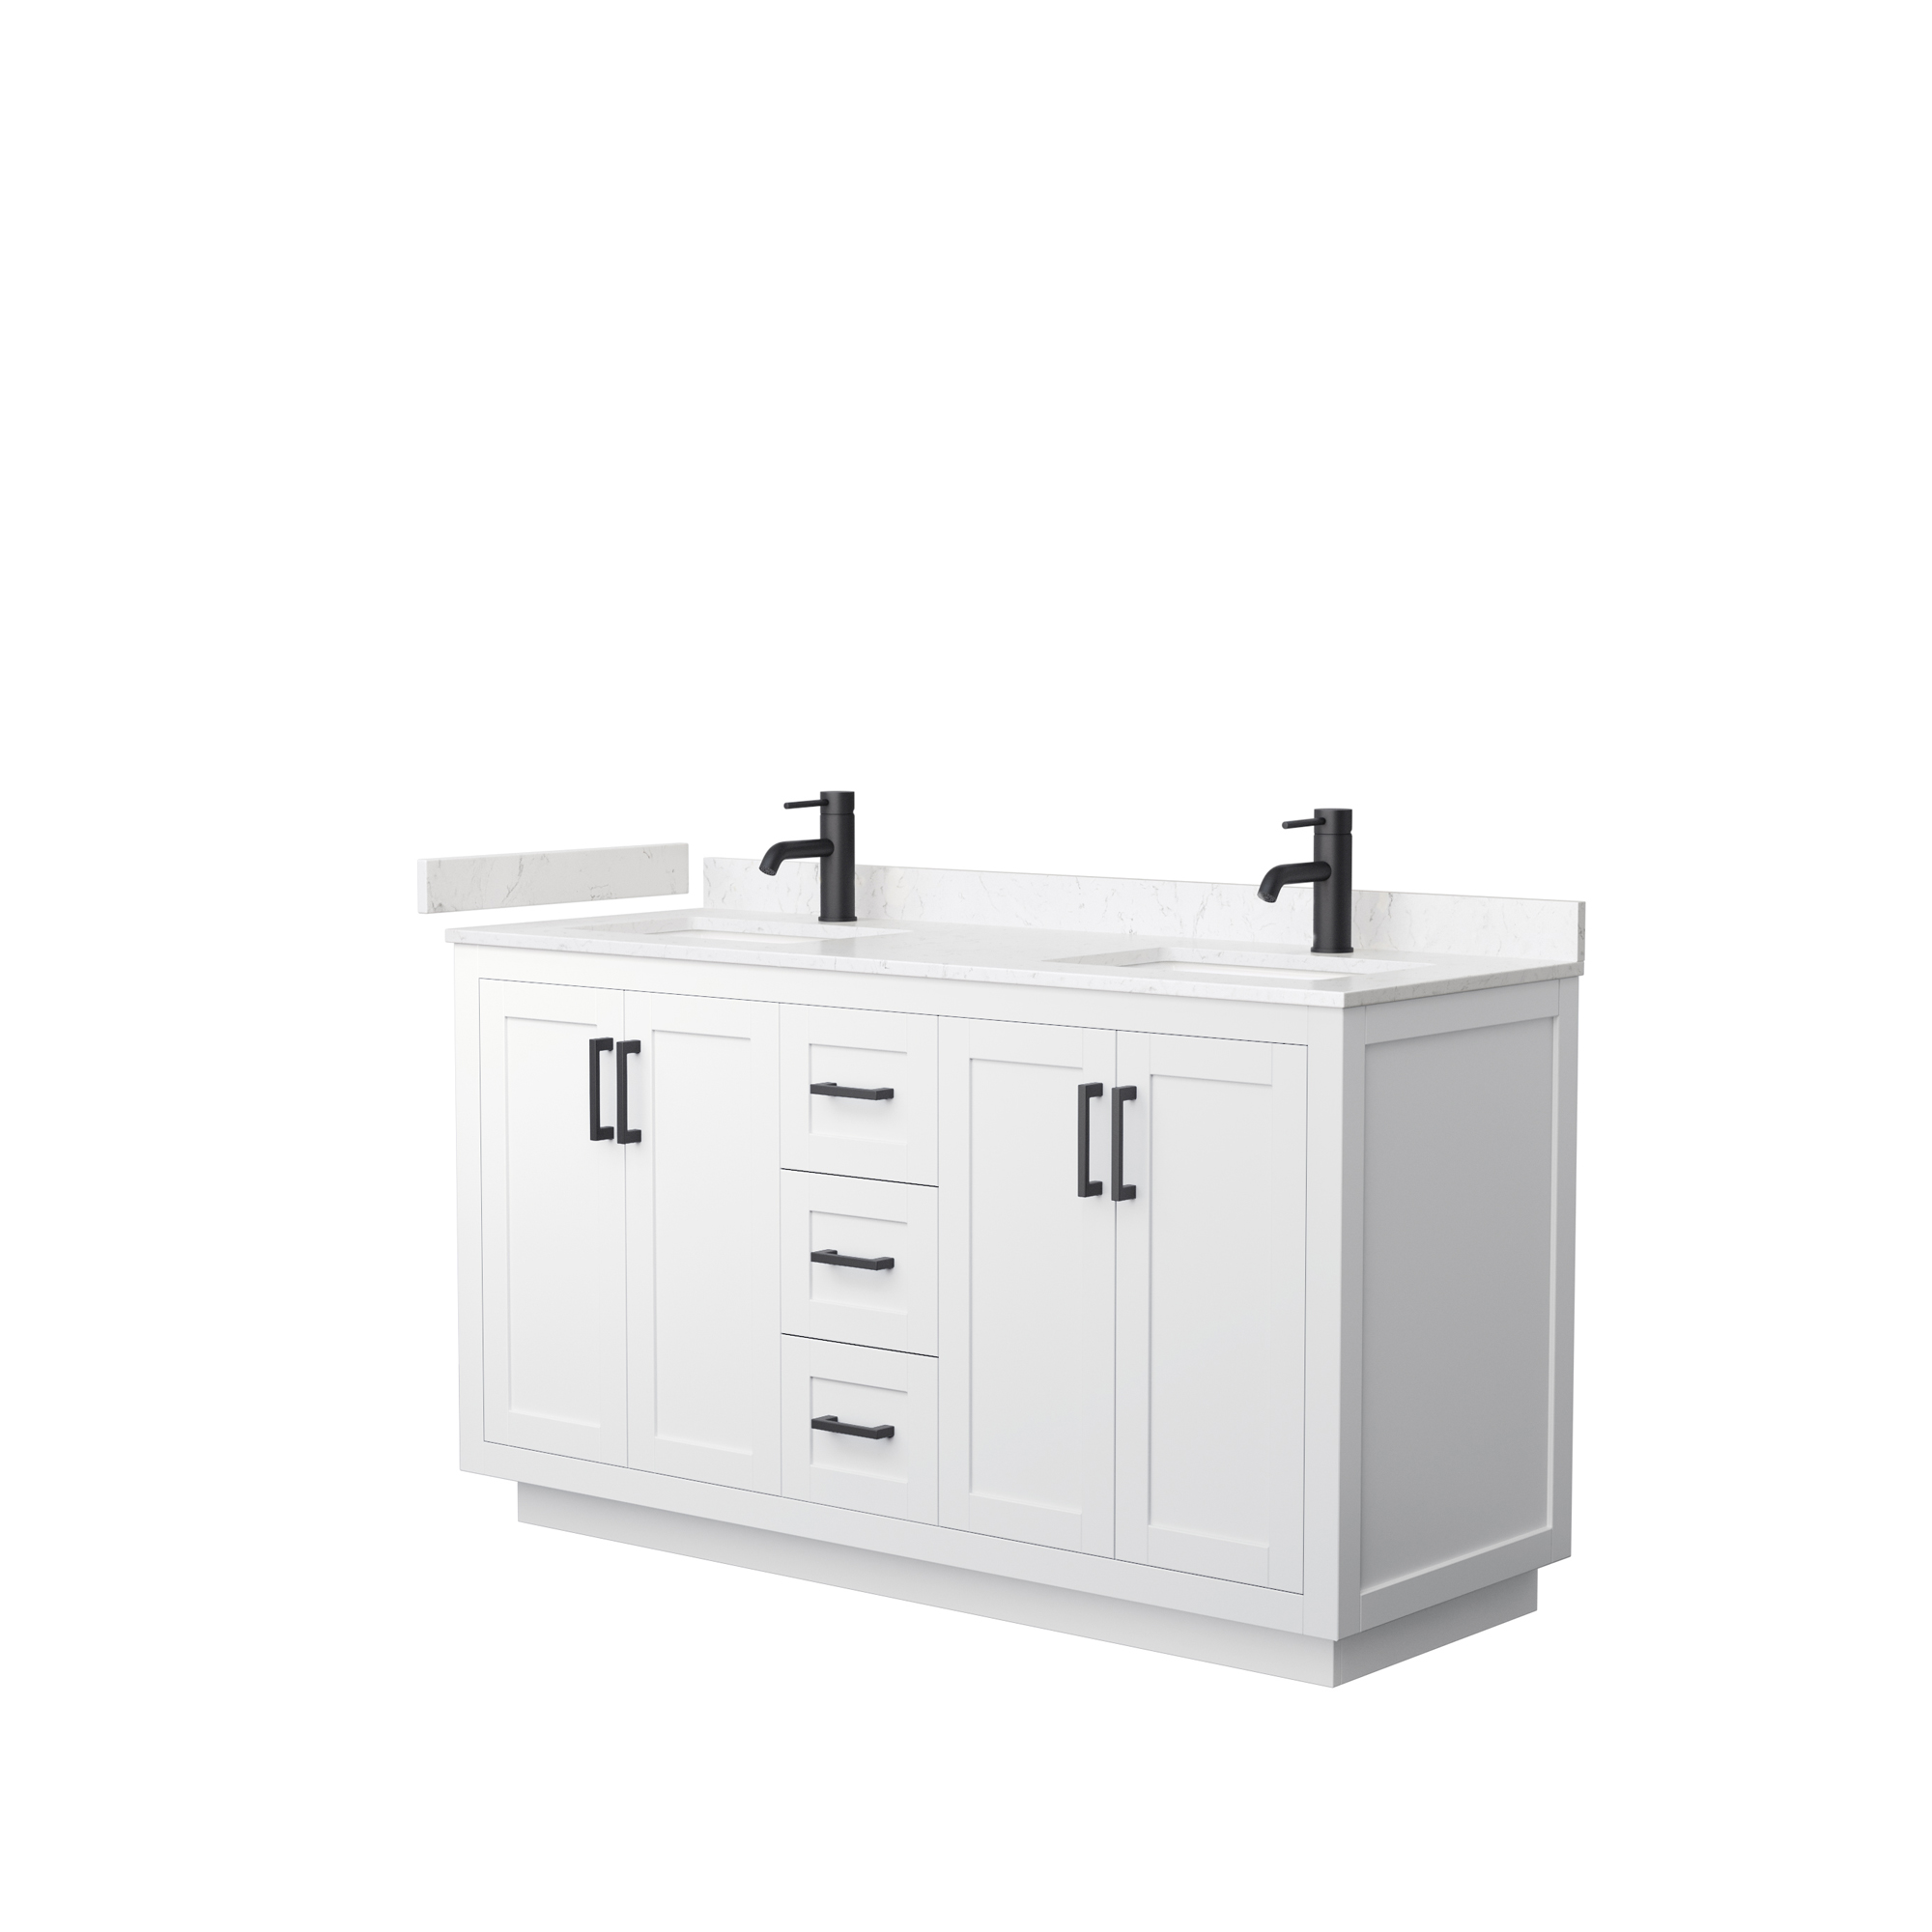 60" Double Bathroom Vanity in White, Light-Vein Carrara Cultured Marble Countertop, Undermount Square Sinks, Matte Black Trim